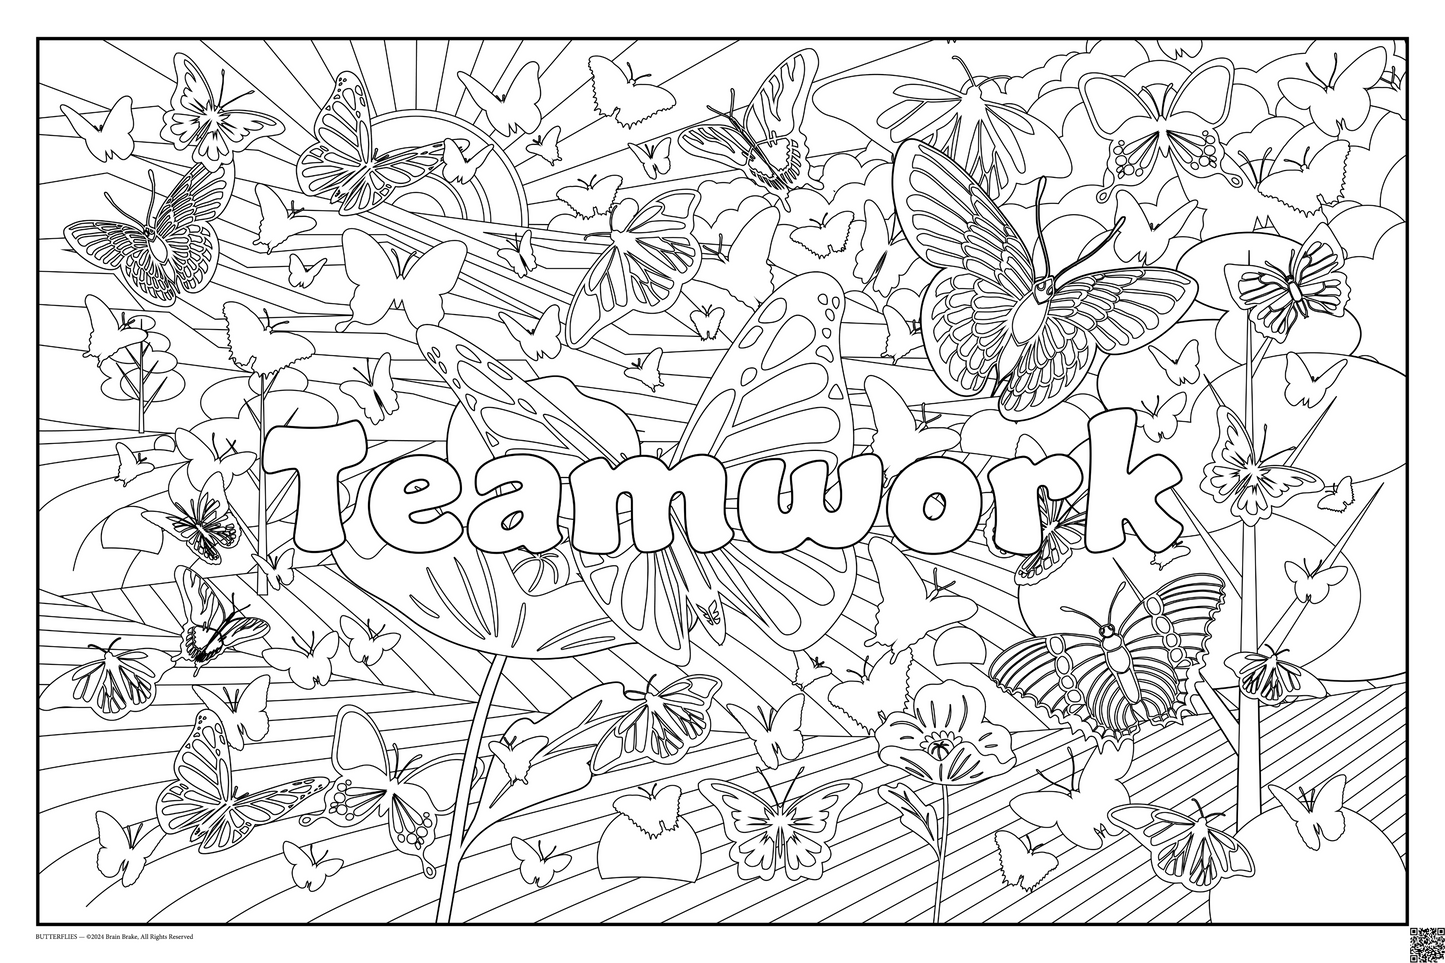 Build Community: Teamwork